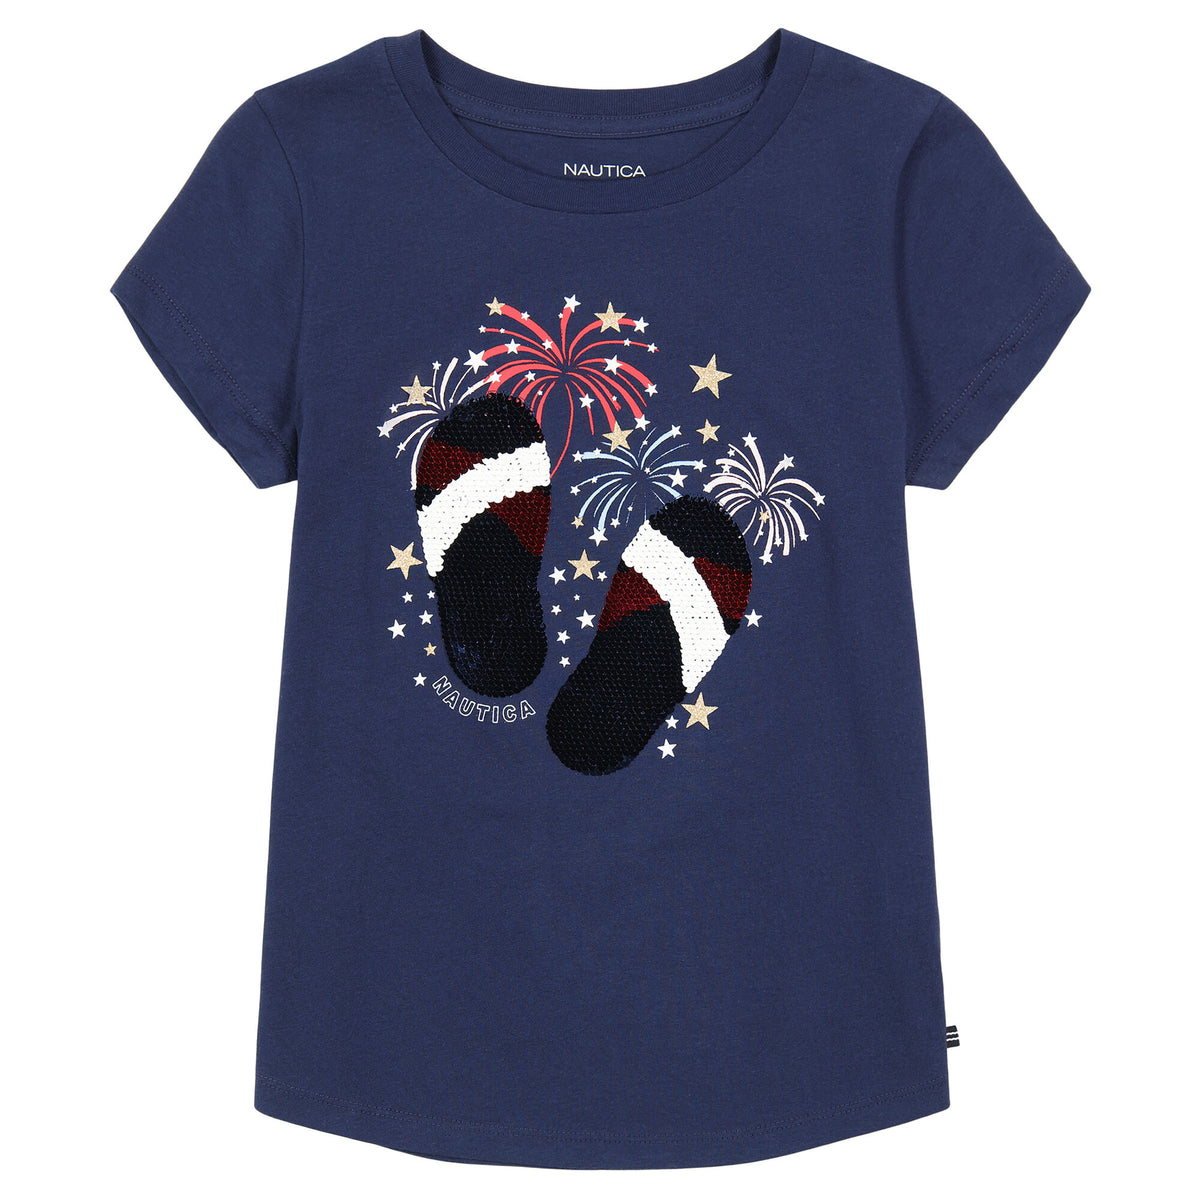 Nautica Girls' Flip Flops And Fireworks Sequin T-Shirt (7-16) Navy